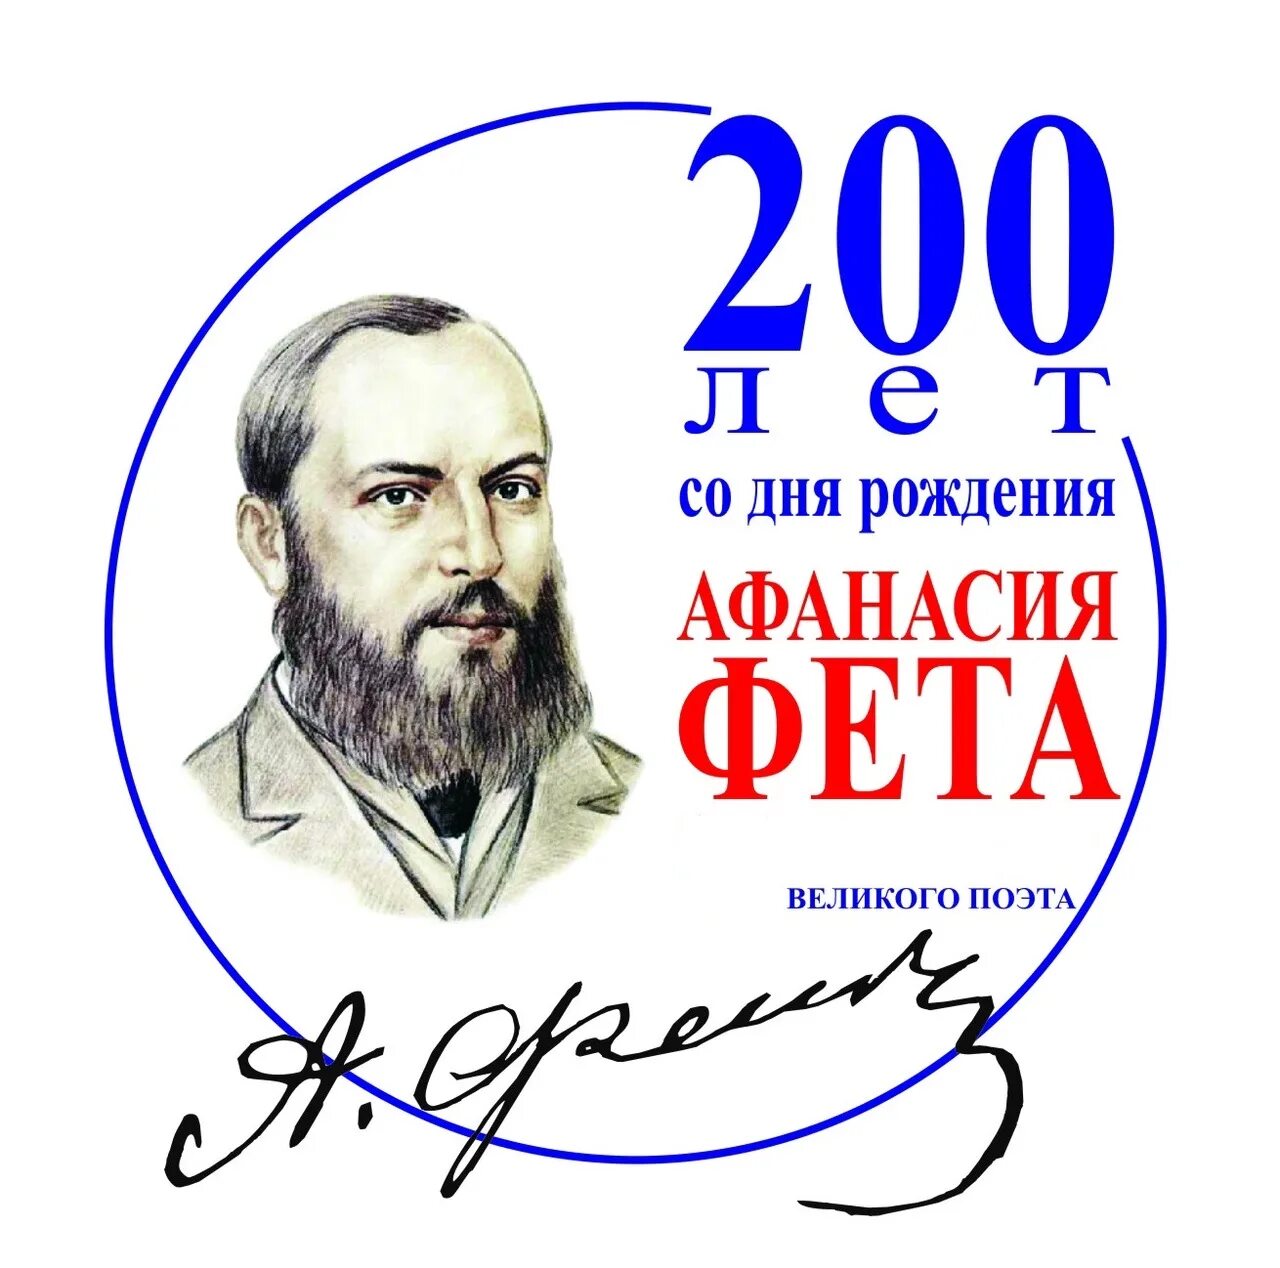 Декабрь писатель. Афанасьевич Фет 200 лет.